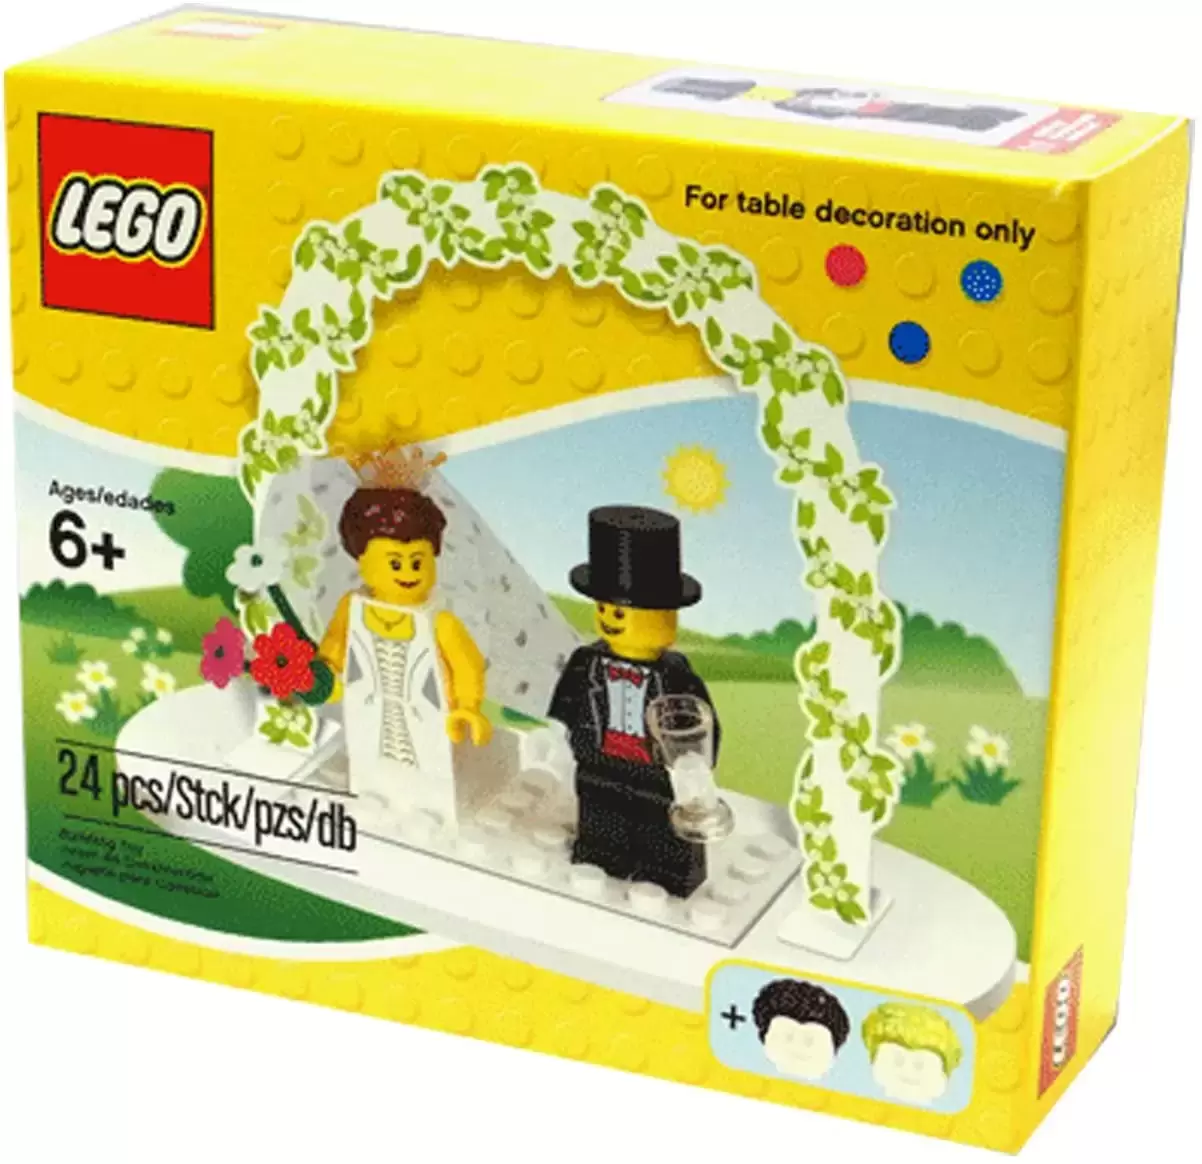 Other LEGO Items - Minifigure Wedding Favour Set